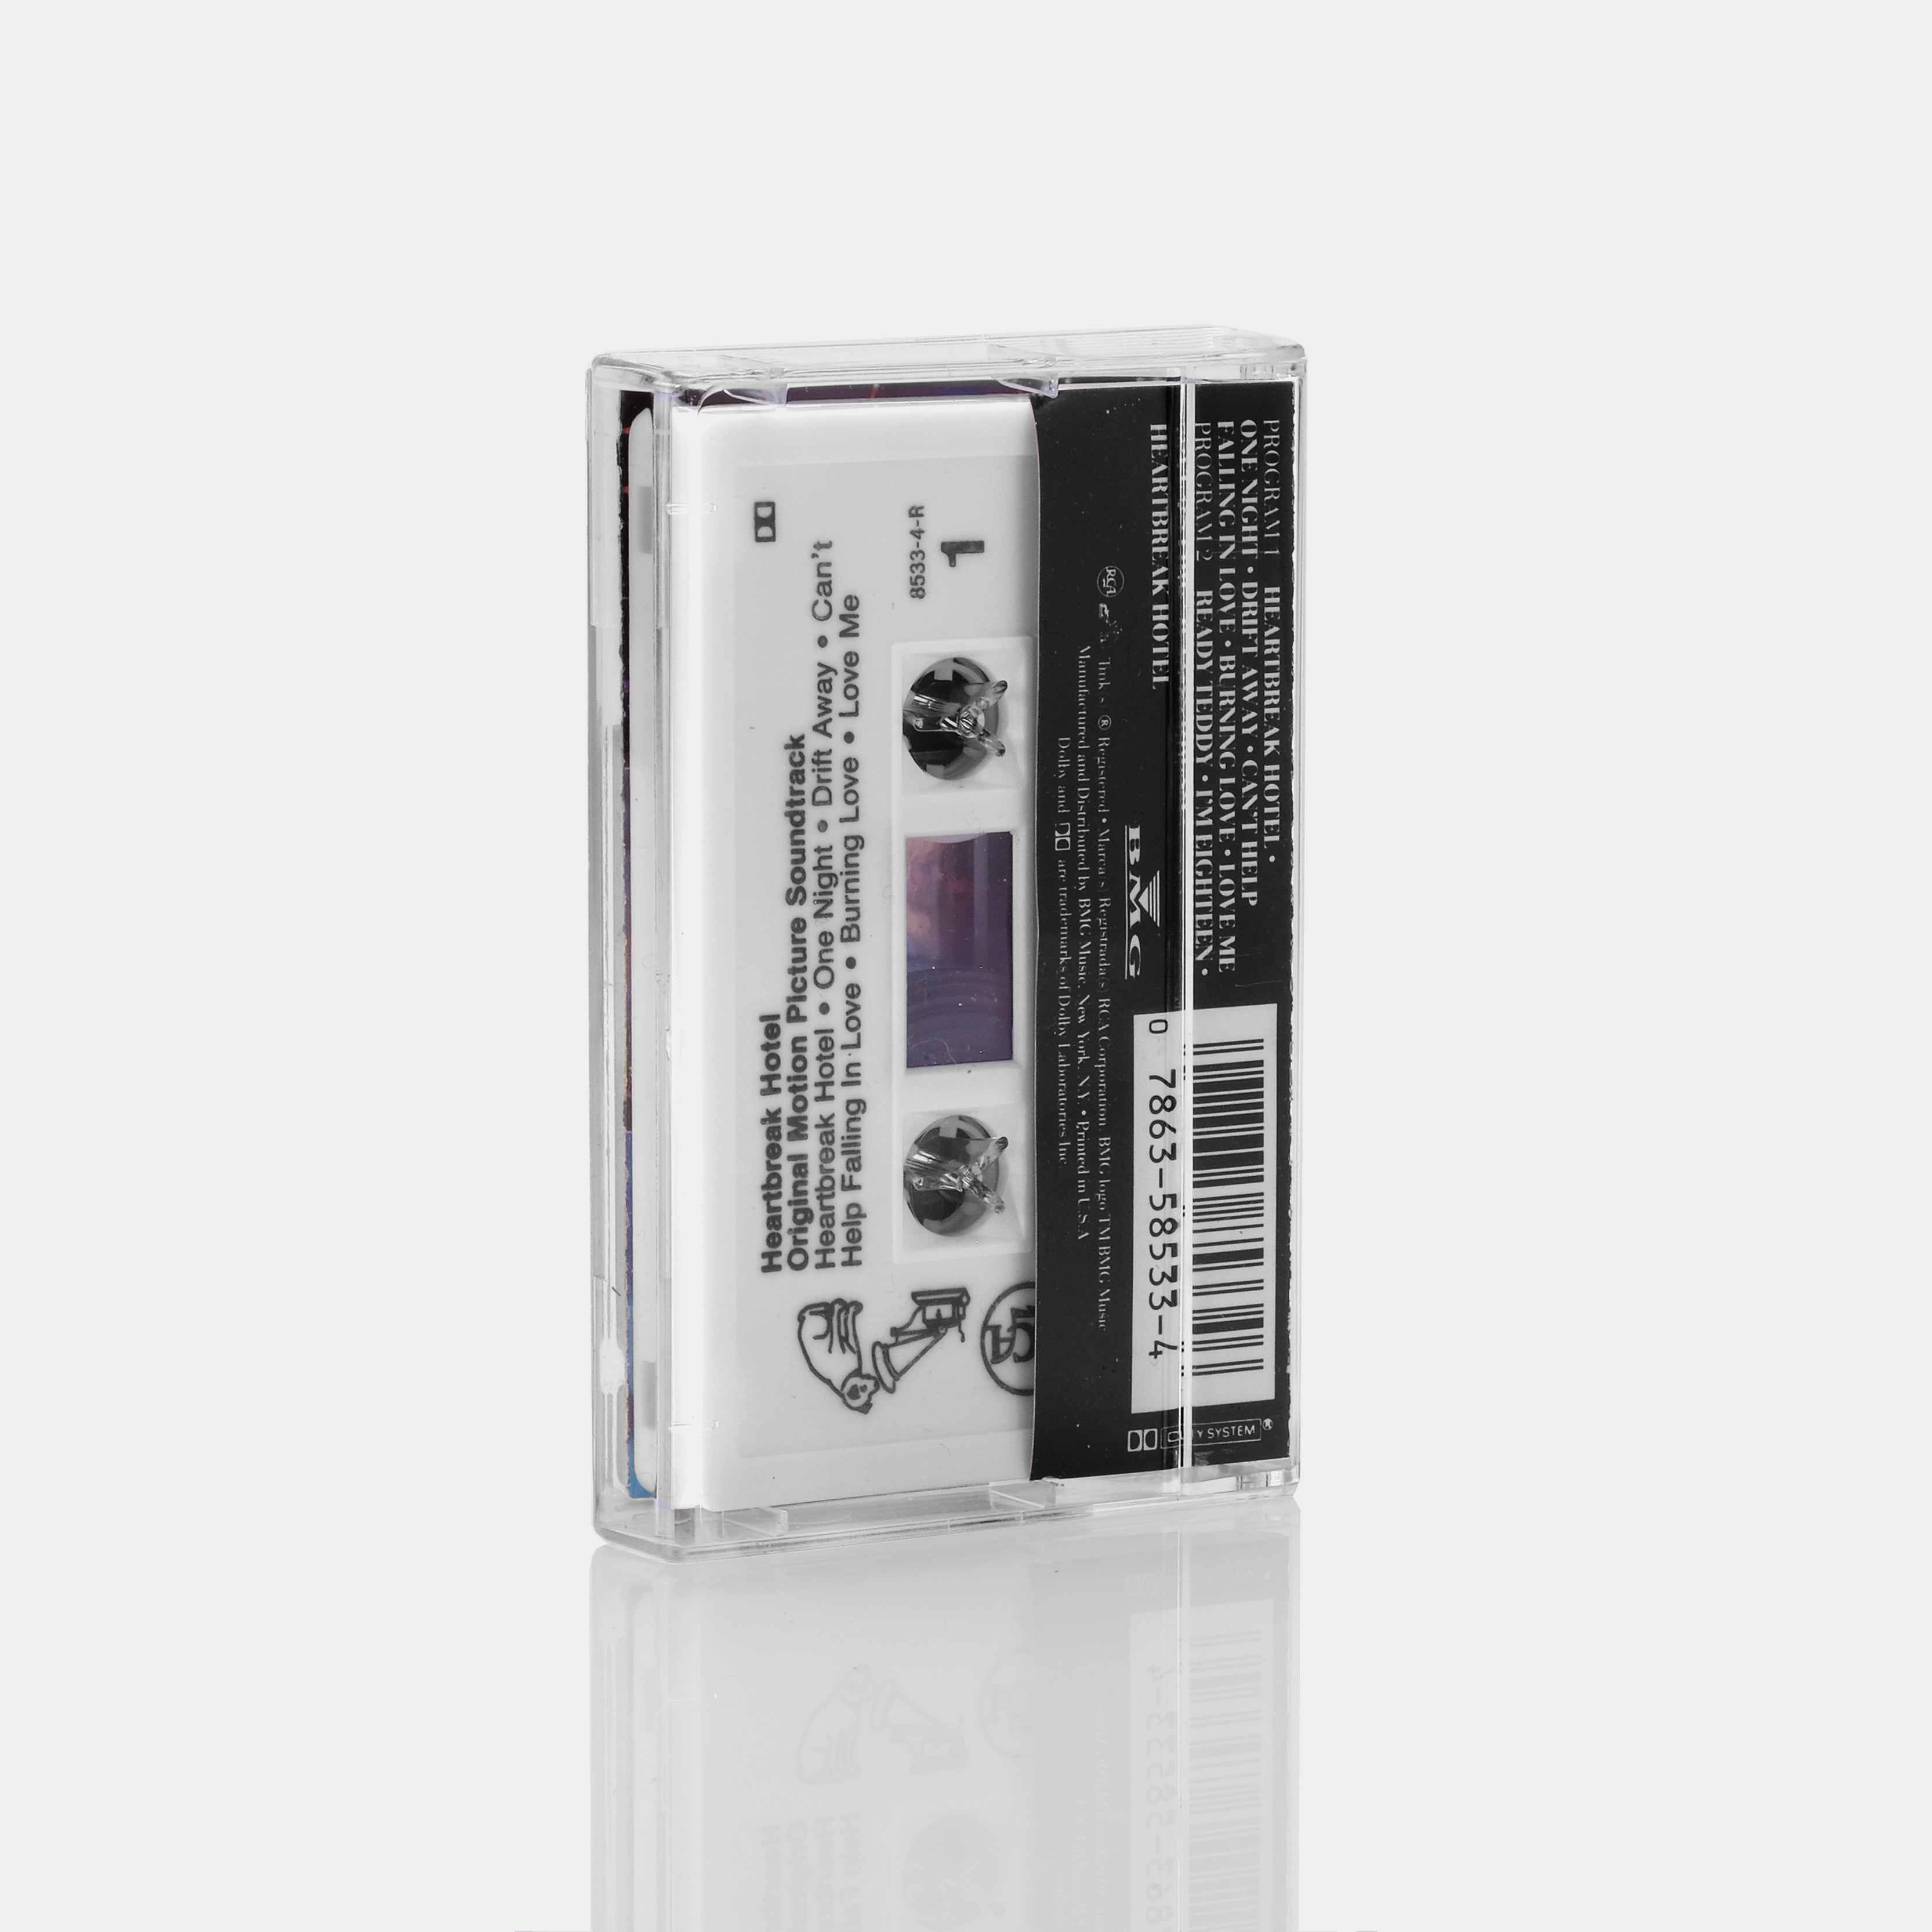 Heartbreak Hotel (Original Motion Picture Soundtrack) Cassette Tape